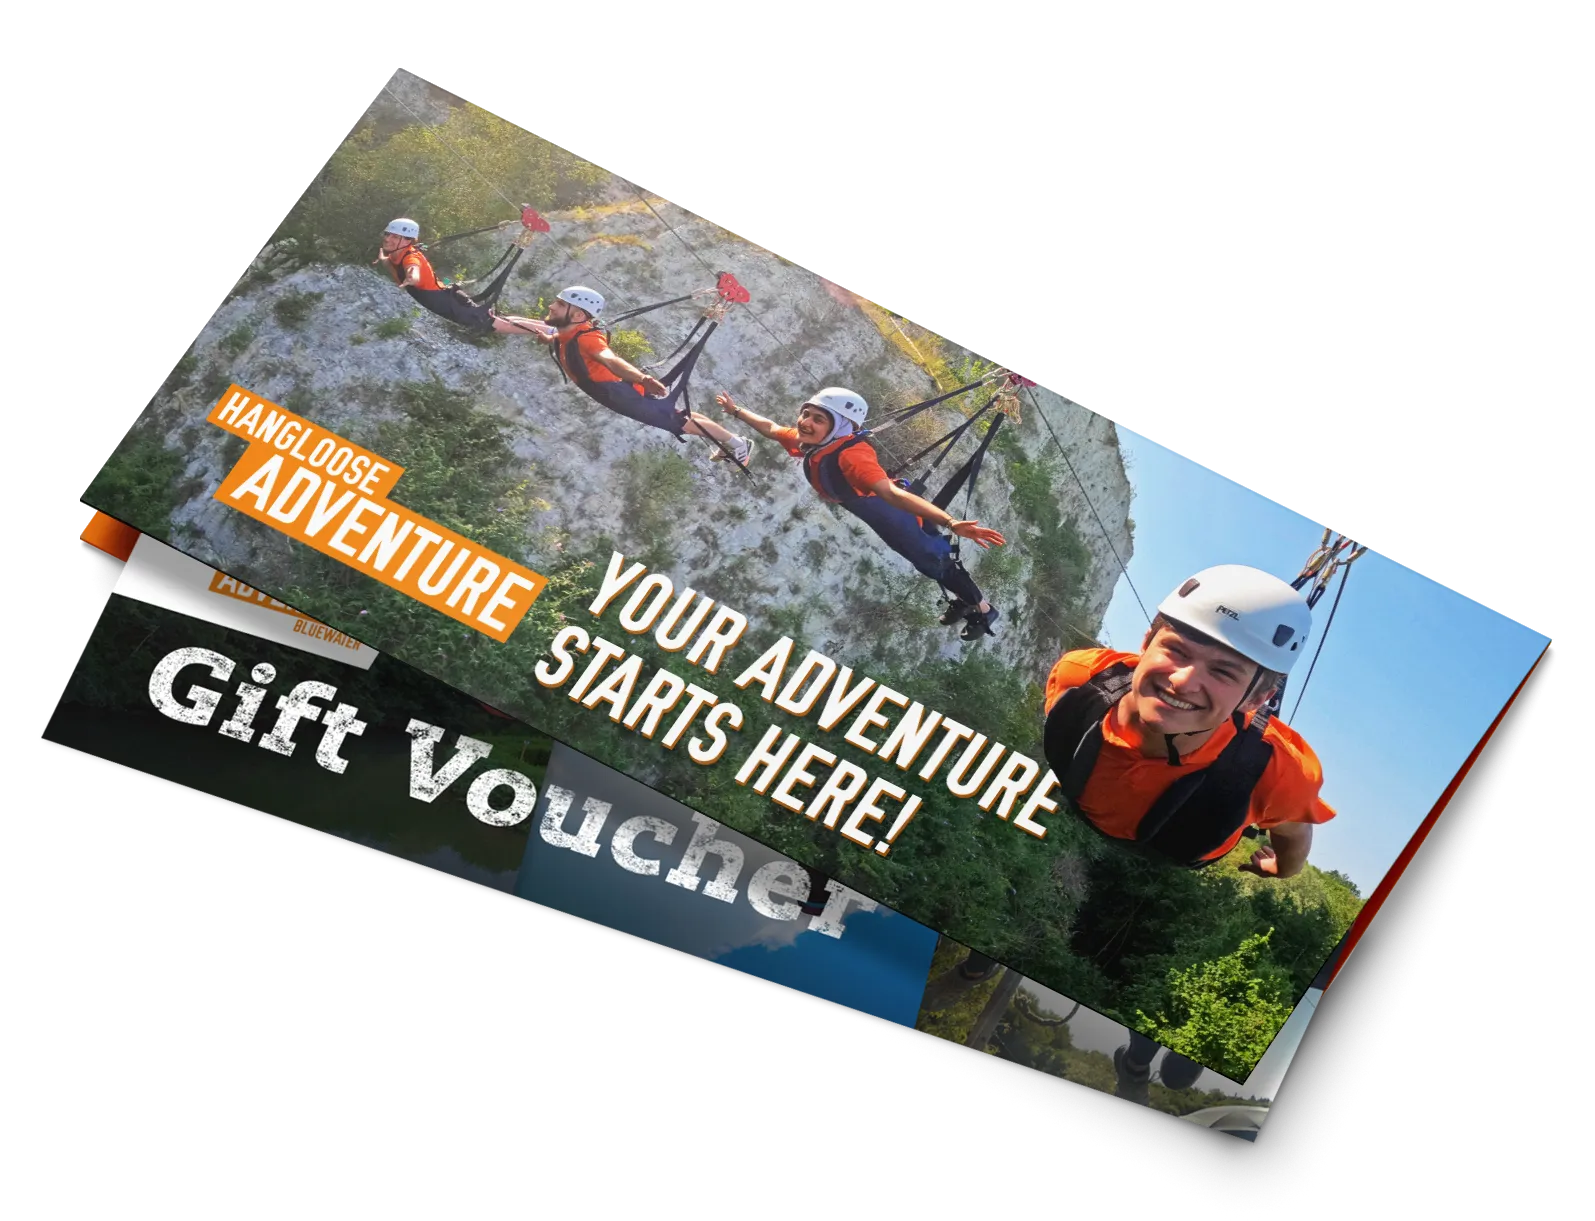 Adventure Vouchers for Skydiving, ziplining and more activities